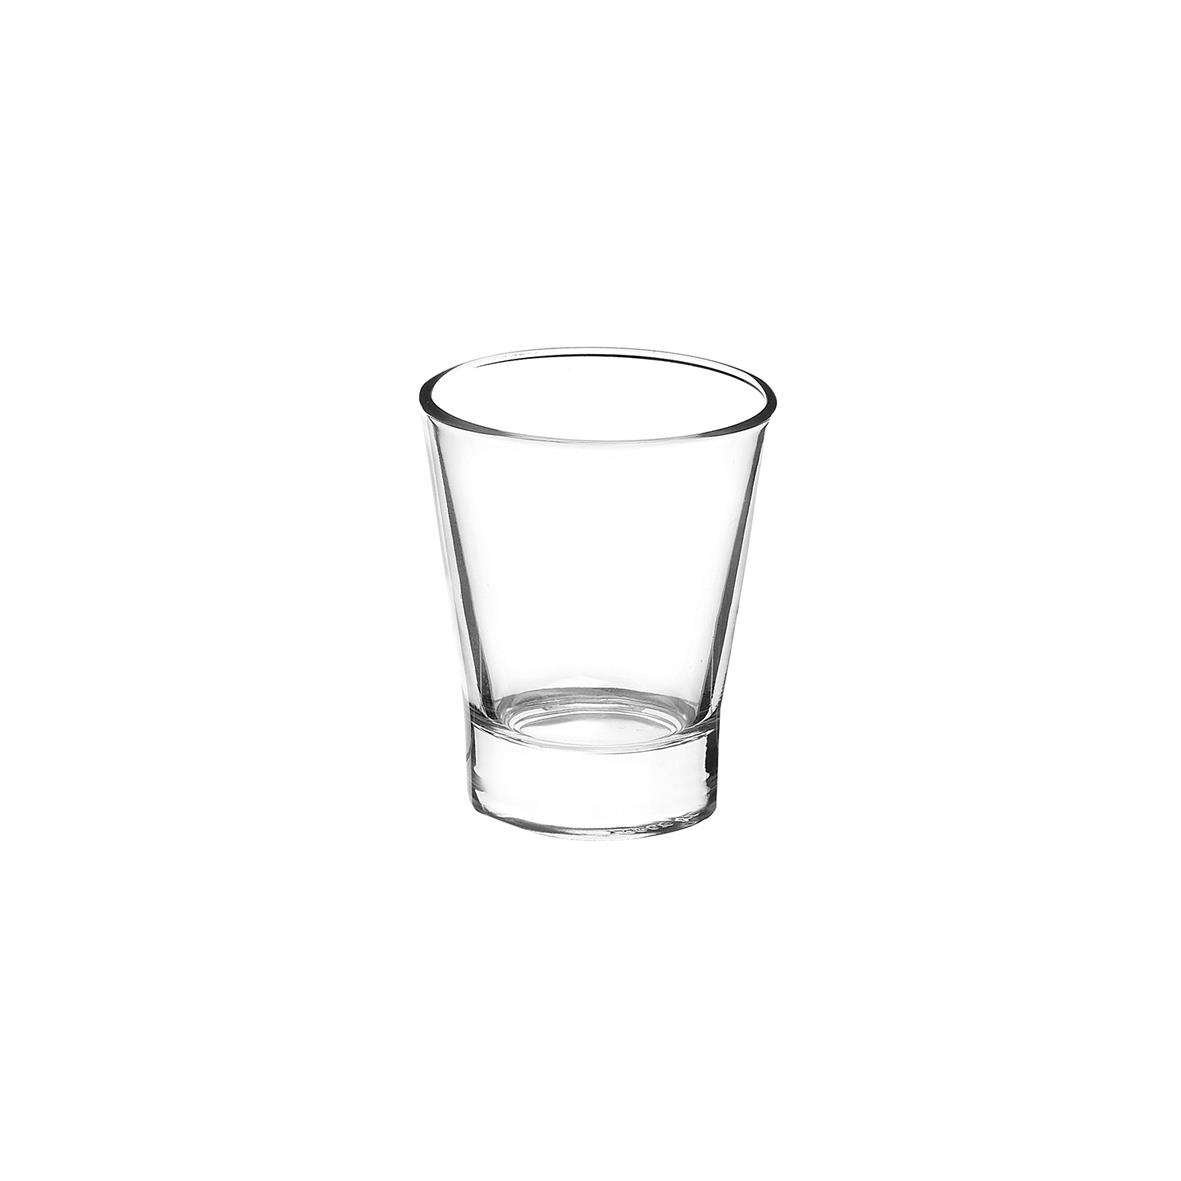 Waterglas Cafeïno 9 cl. bedrukken